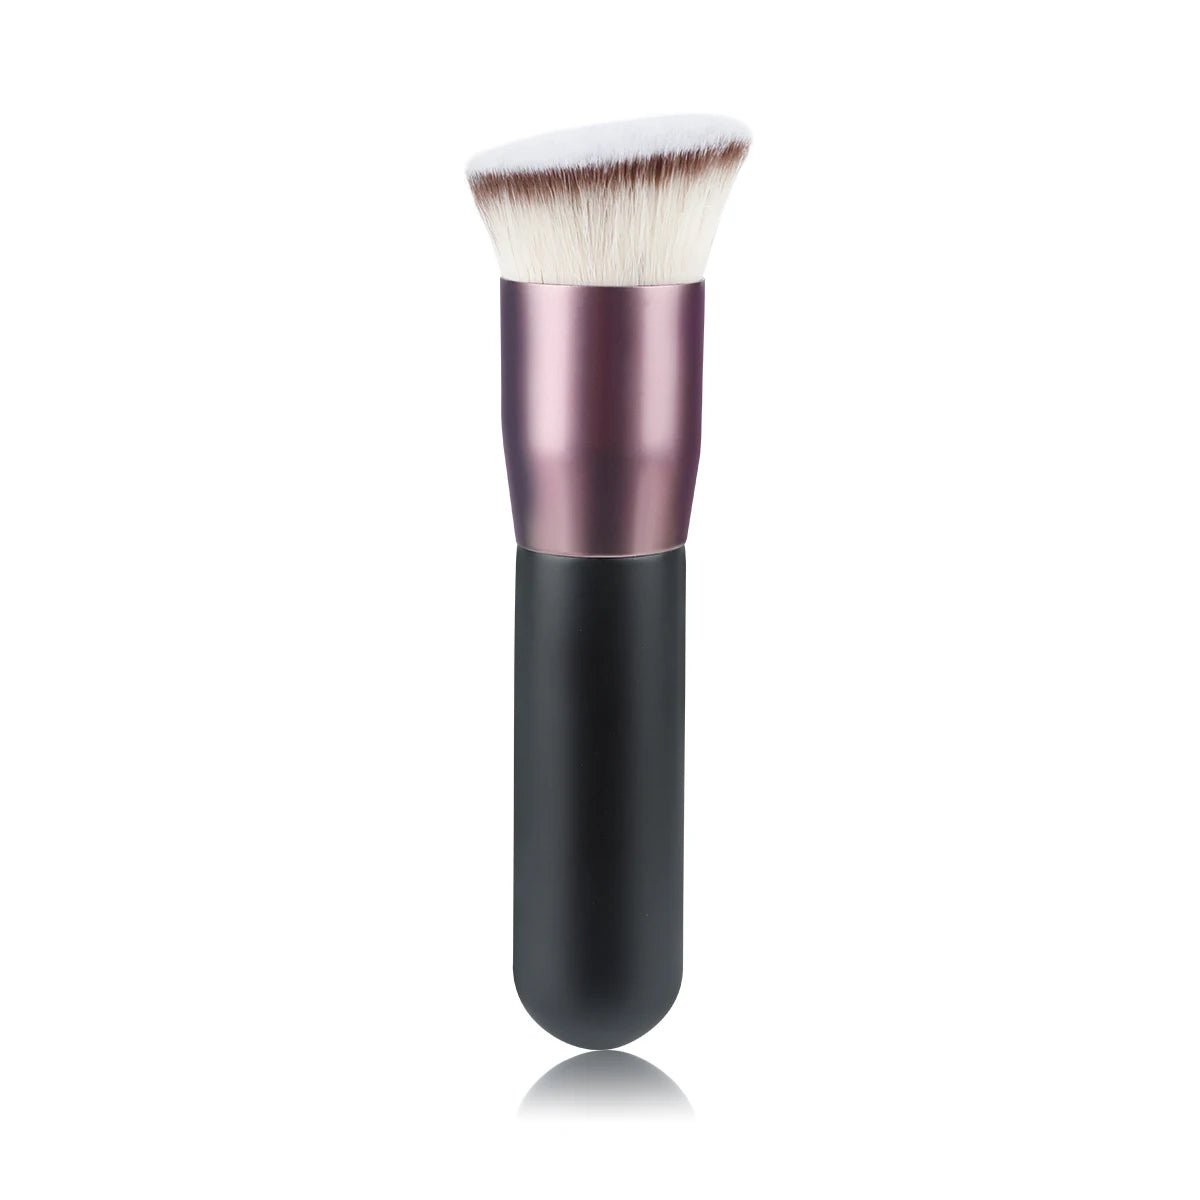 1Pcs Professional Flat Makeup Brushes Powder Liquid Foundation Blush Brush Concealer Contour Facial Make up Brushes Tool ShopOnlyDeal